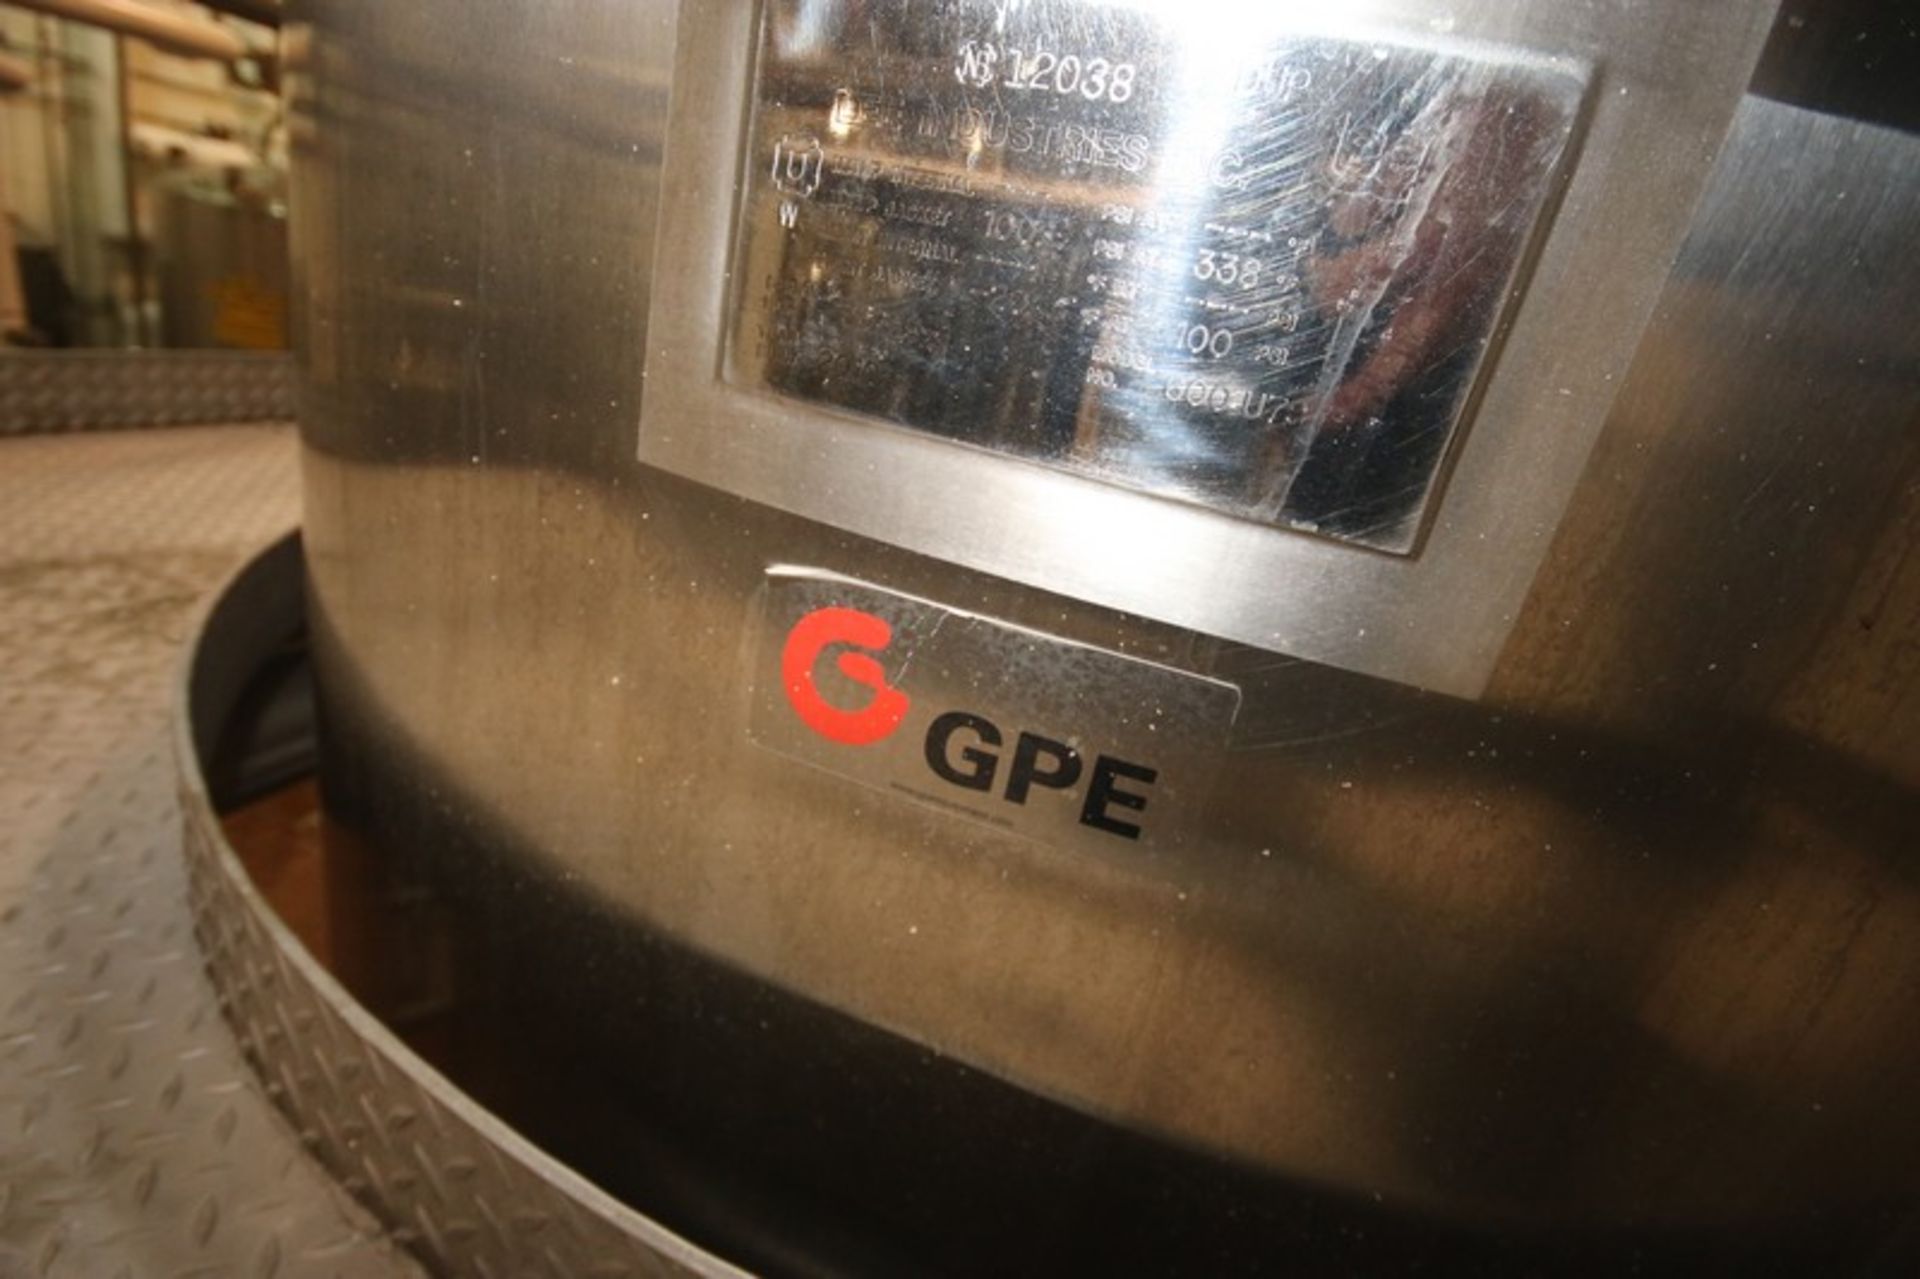 2010 GPE 600 Gal. S/S Processor, M/N 600U79, Nat'L Board Number: 12038, MAWP 100 PSI @ 338 F, - Image 15 of 20